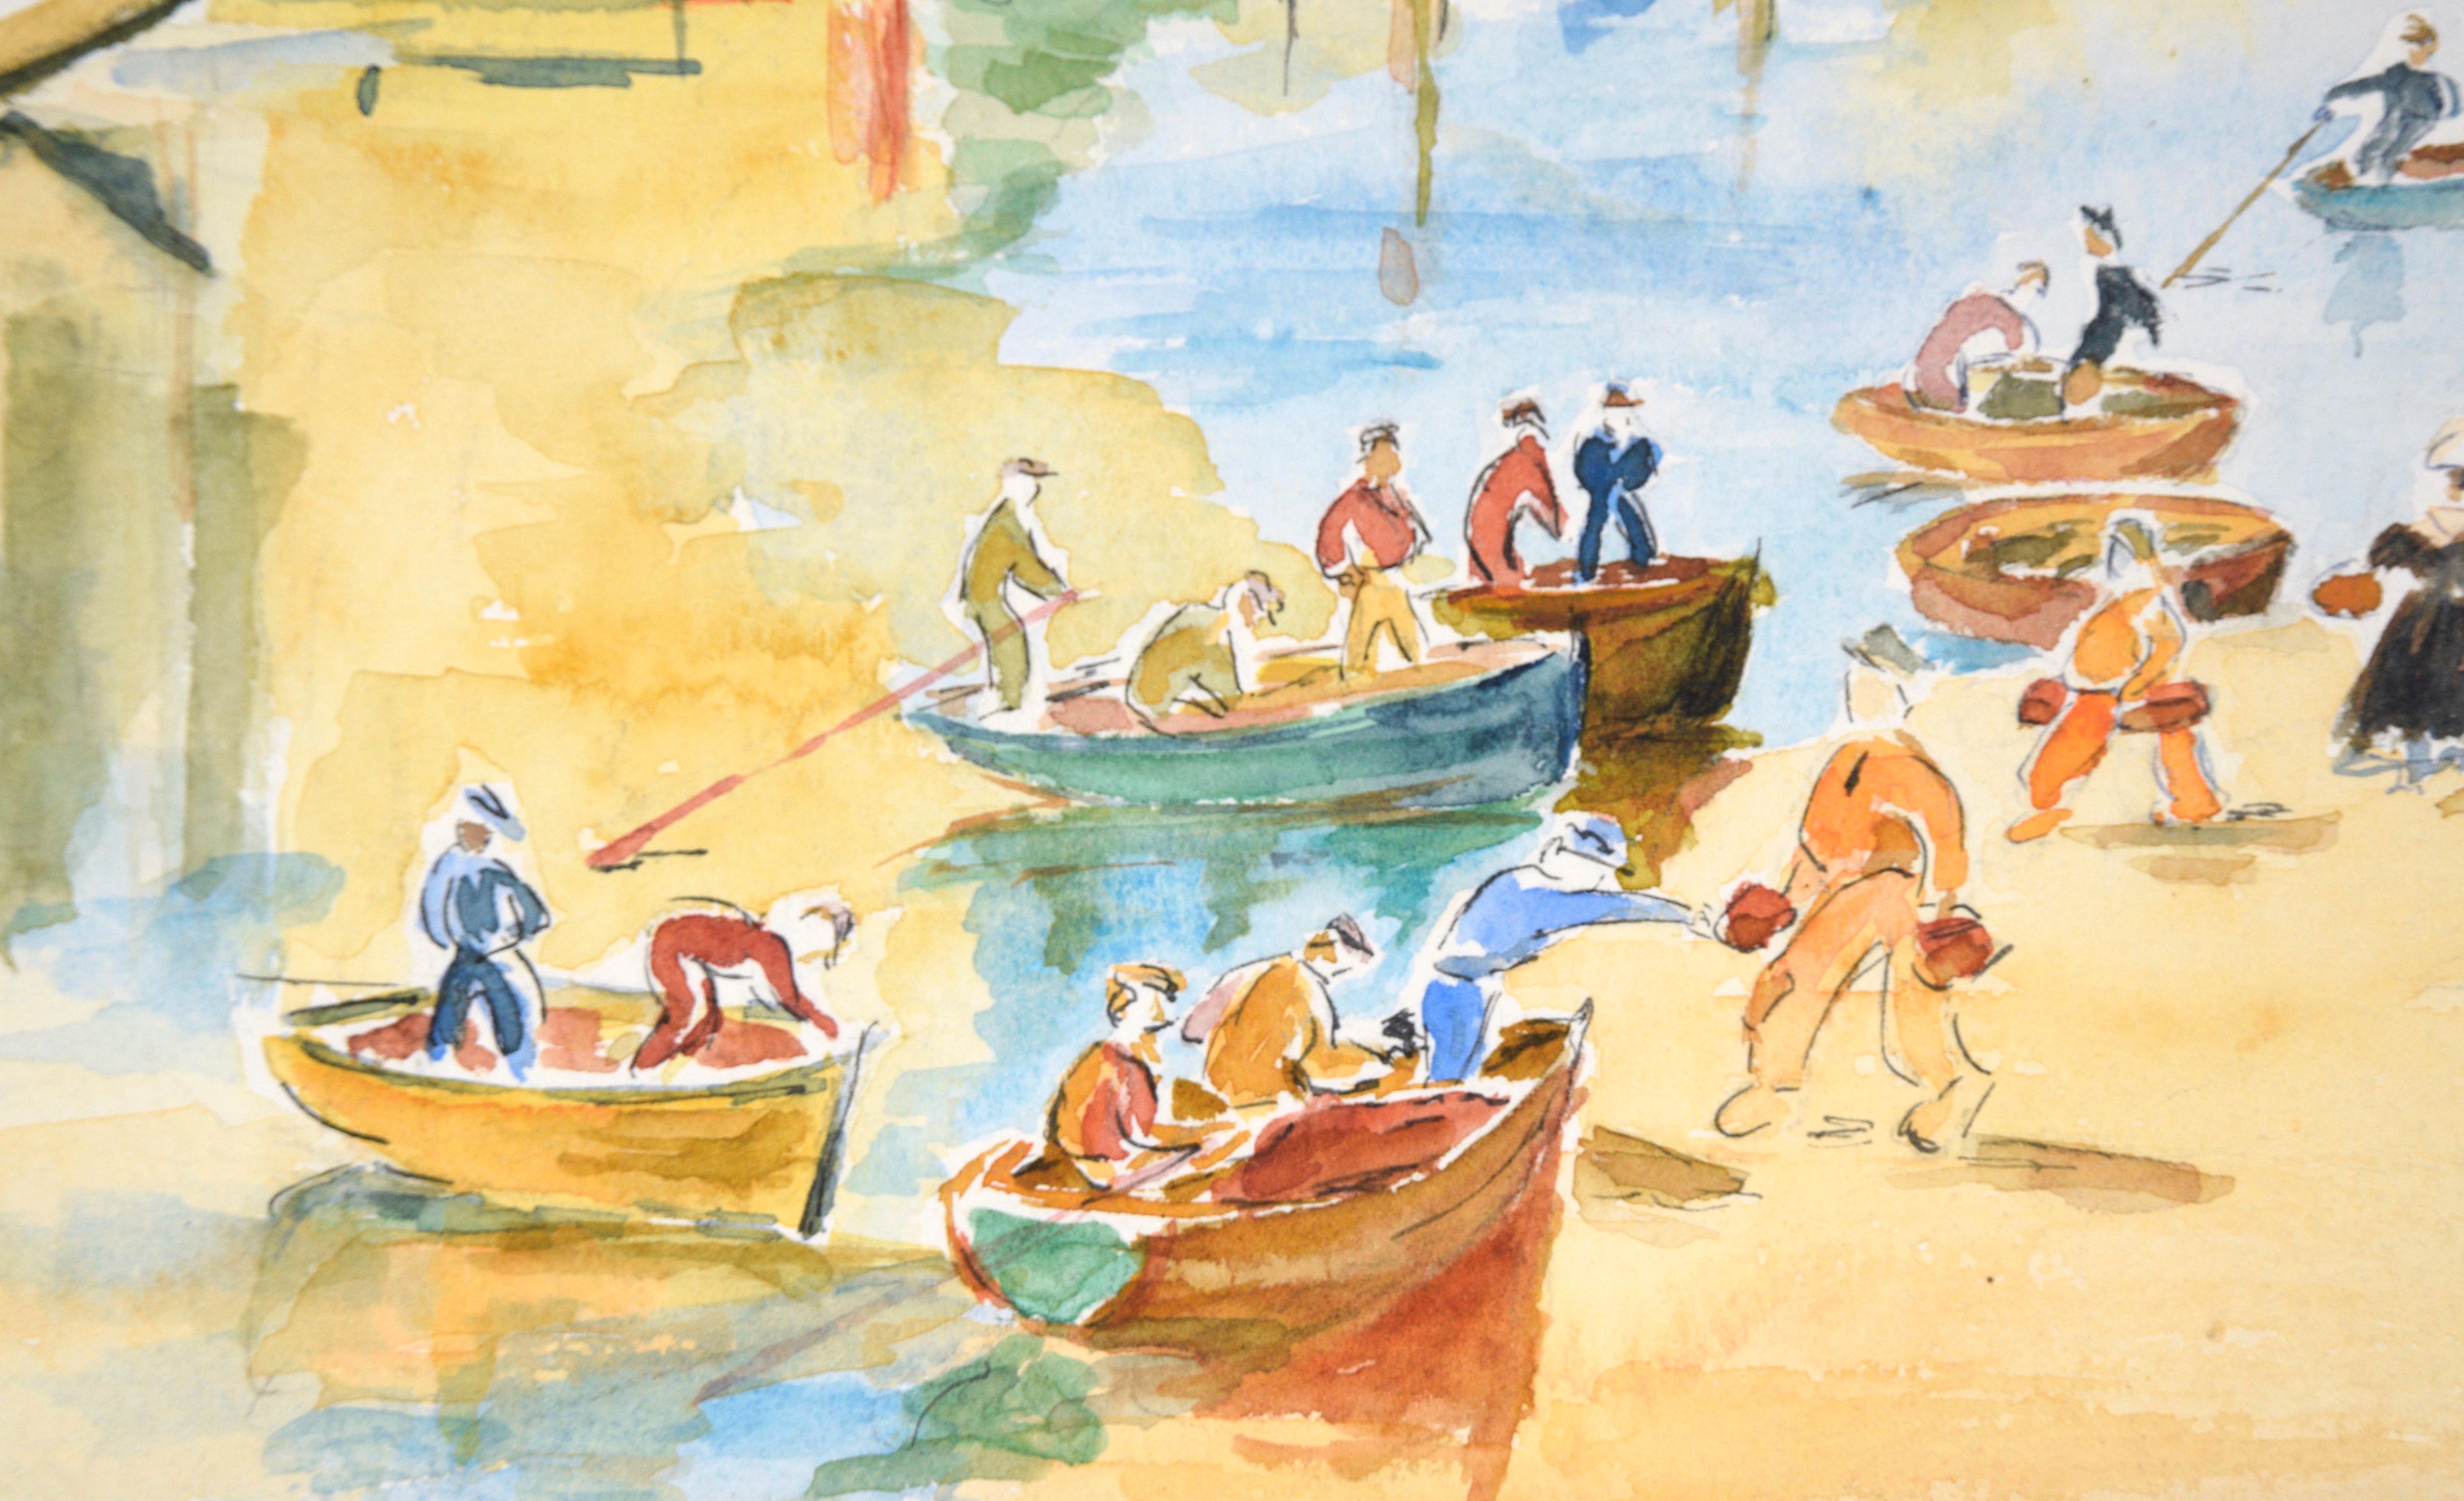 Fishermen at the Shore in Concarneau - France Landscape by M. Saint-Guily - Impressionist Art by Edouard Doigneau